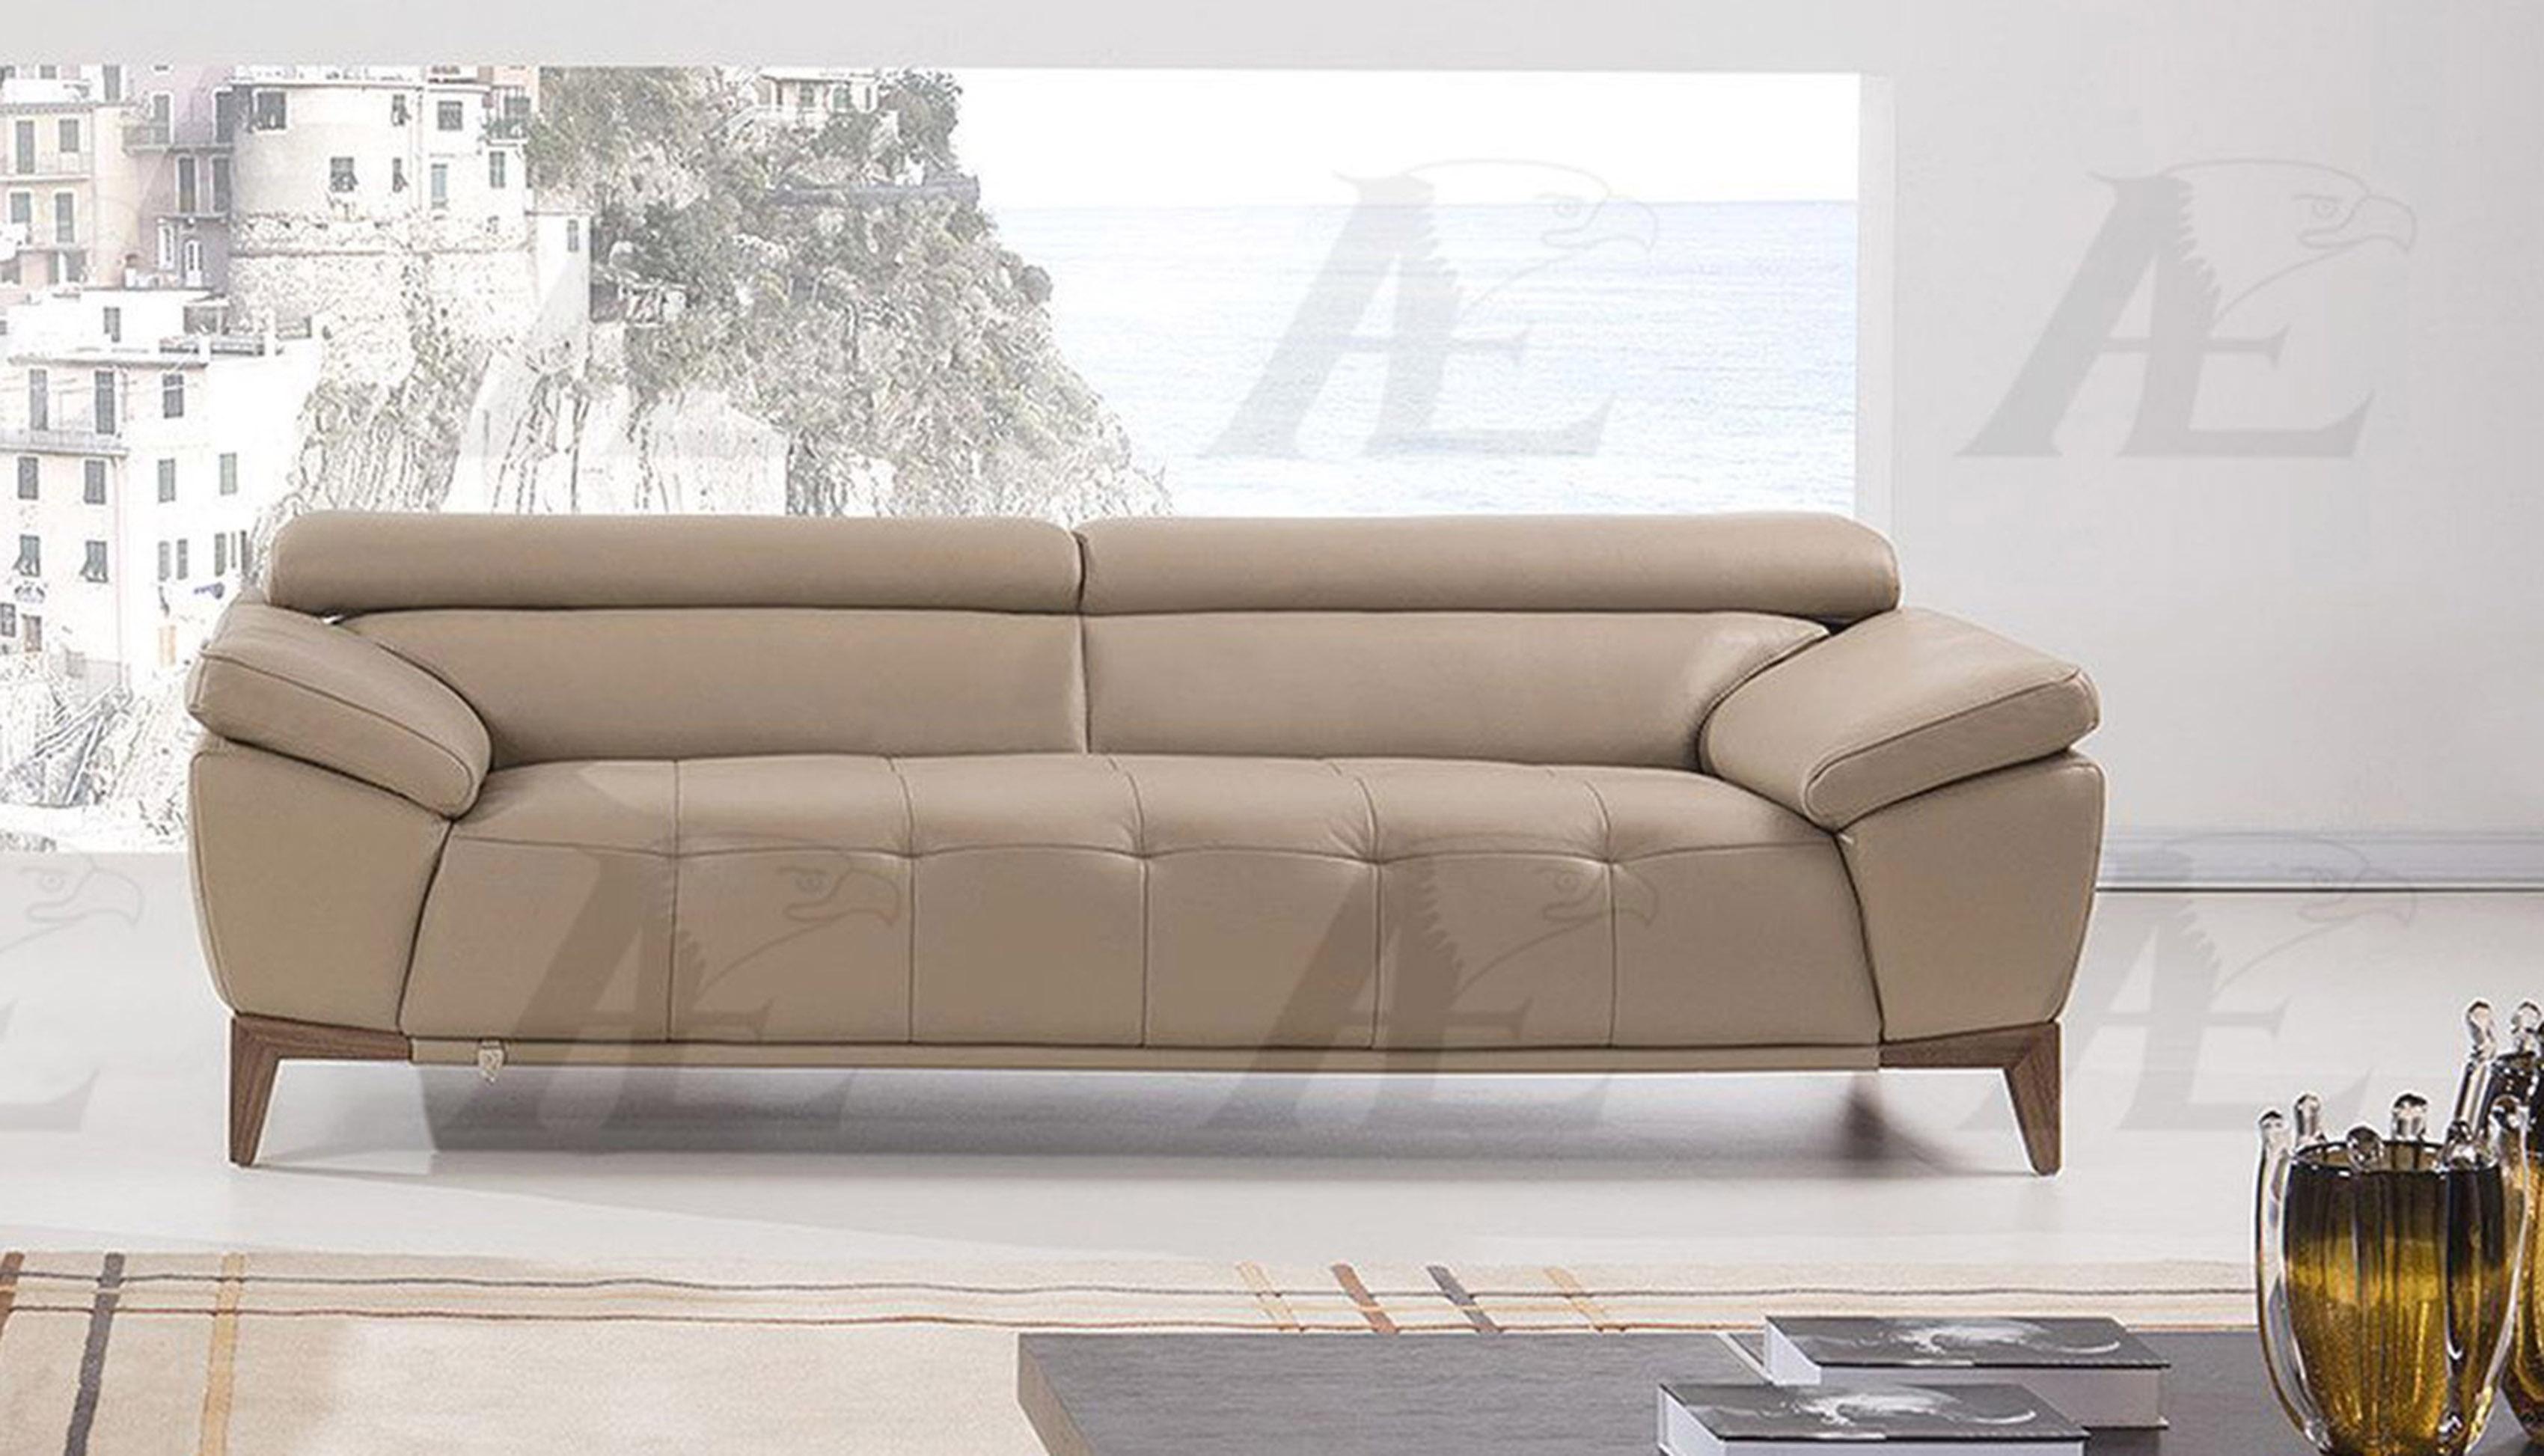 

    
American Eagle Furniture EK076-TAN Tan Top Grain Italian Leather Sofa Modern
